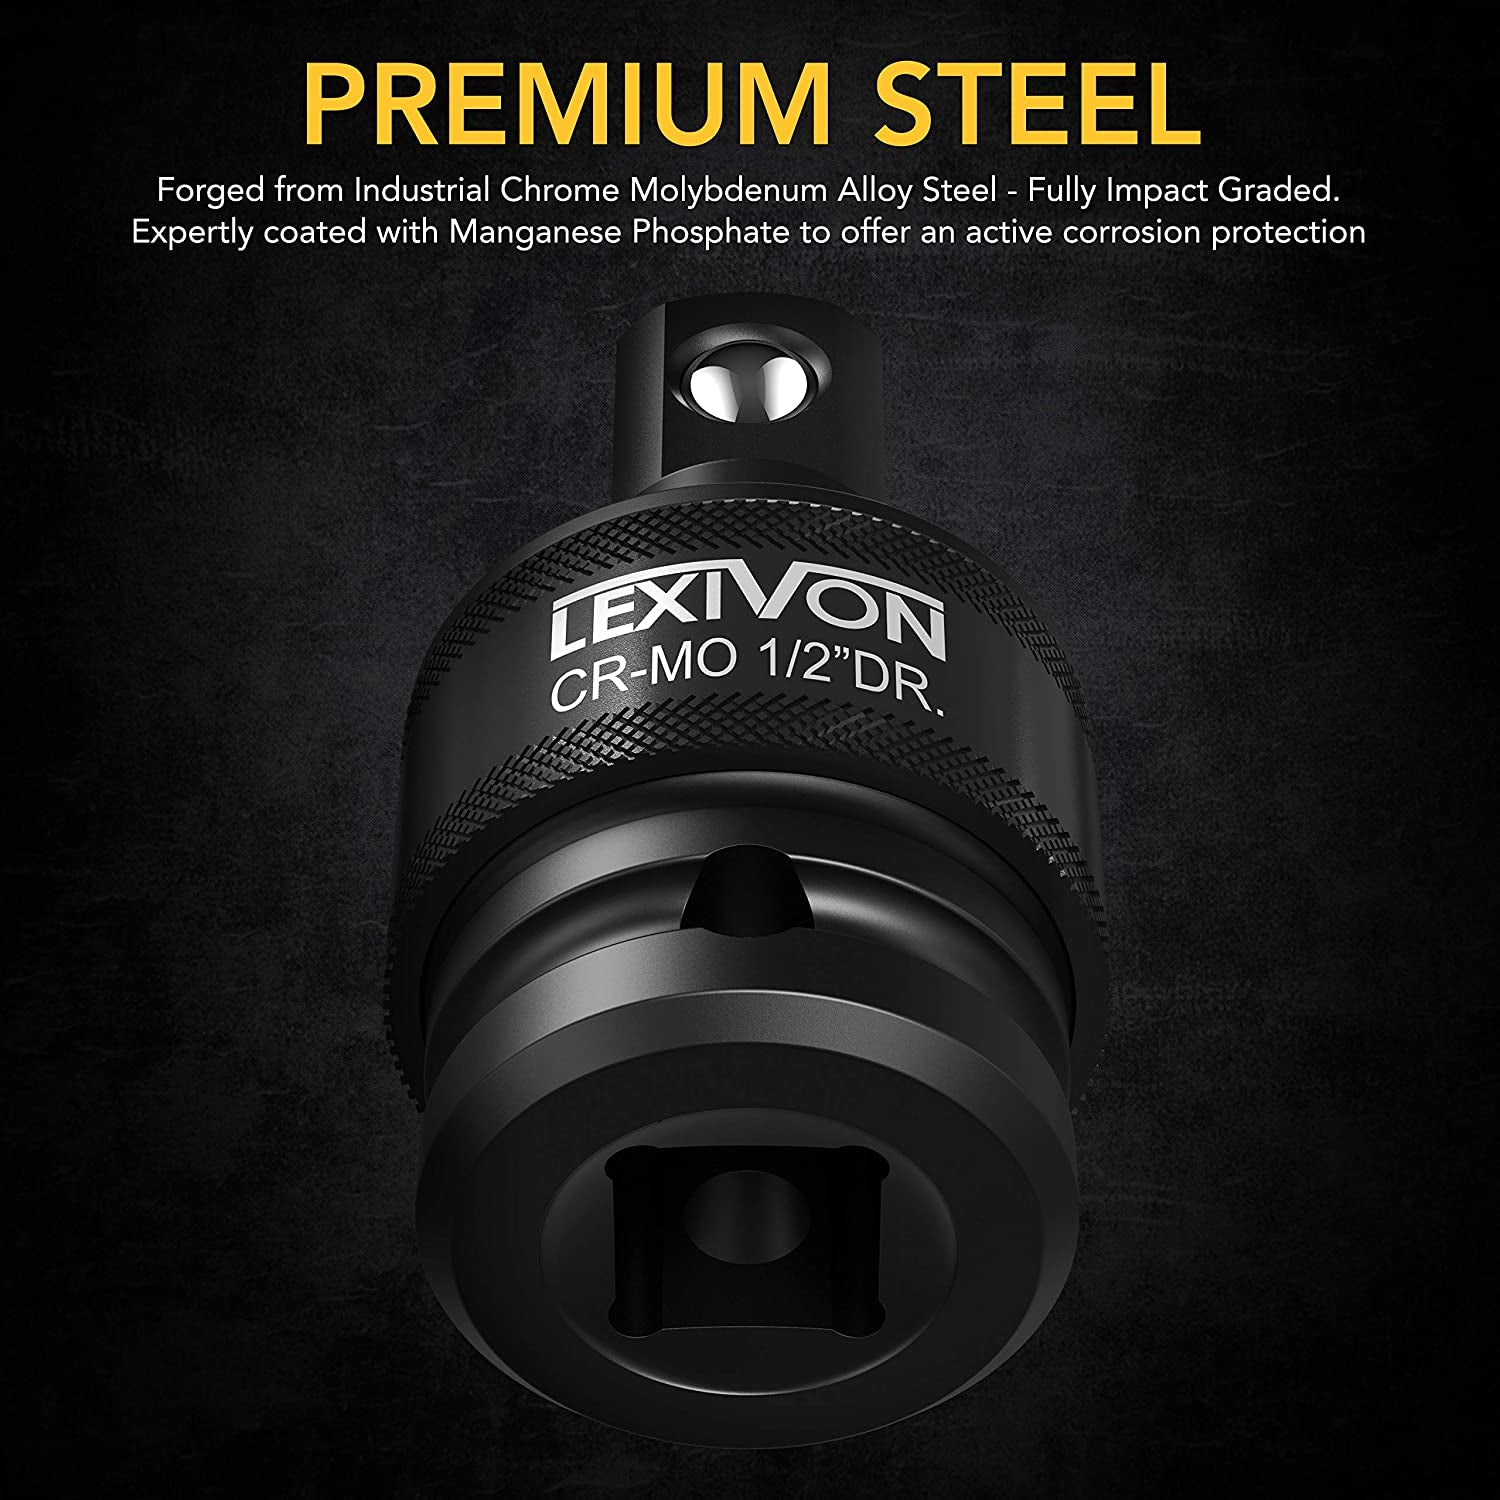 LEXIVON, LEXIVON Premium Impact Universal Joint Socket Swivel Set | 3-Piece Ball Spring Design 1/2", 3/8", and 1/4" U-Joint Drive | Cr-Mo Steel - Full Impact Grade (LX-113)